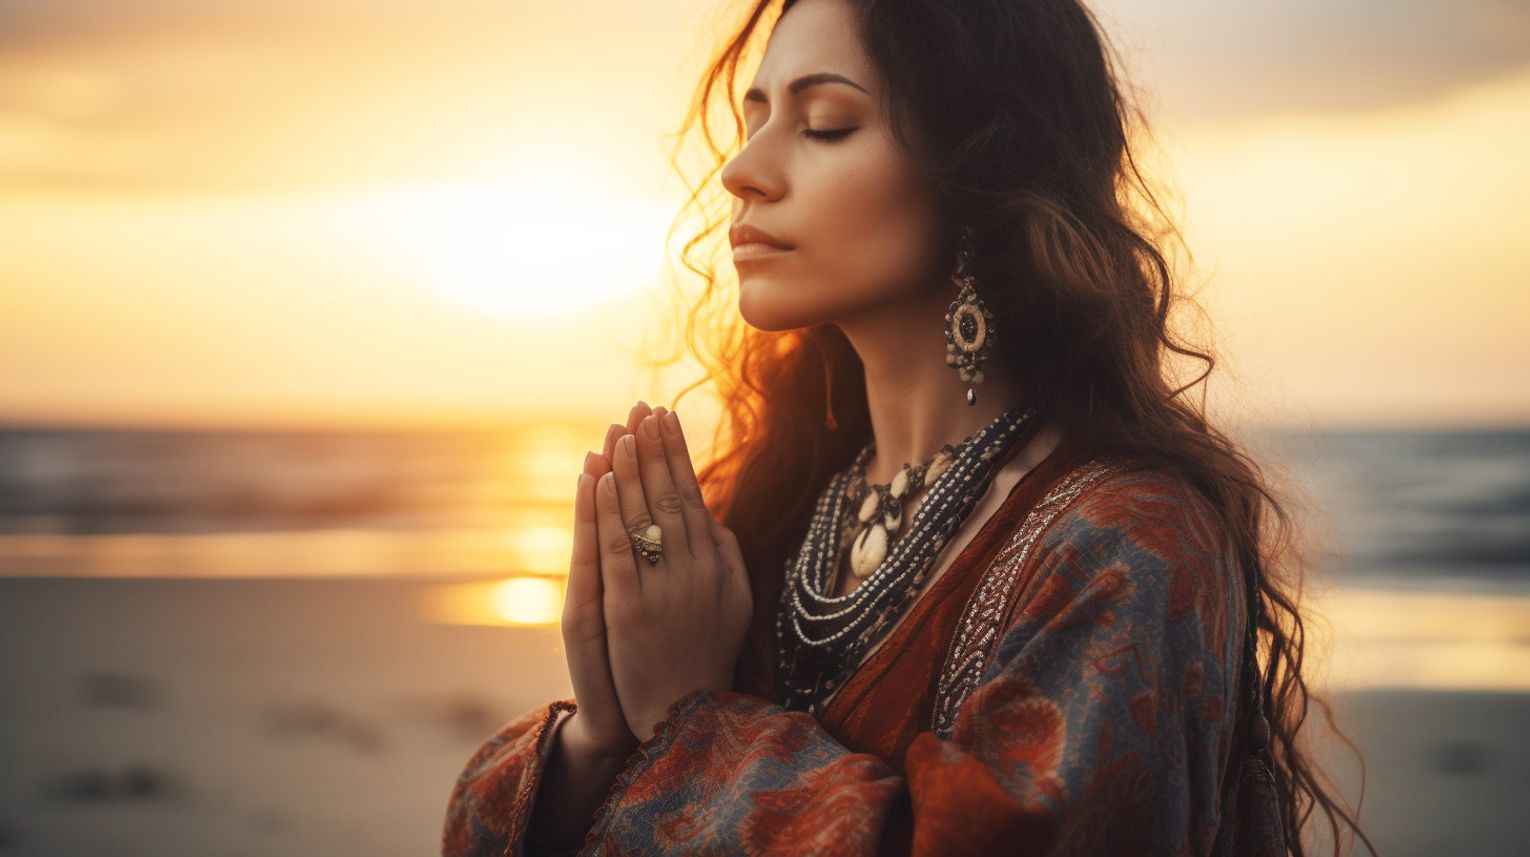 A woman praying on the beach